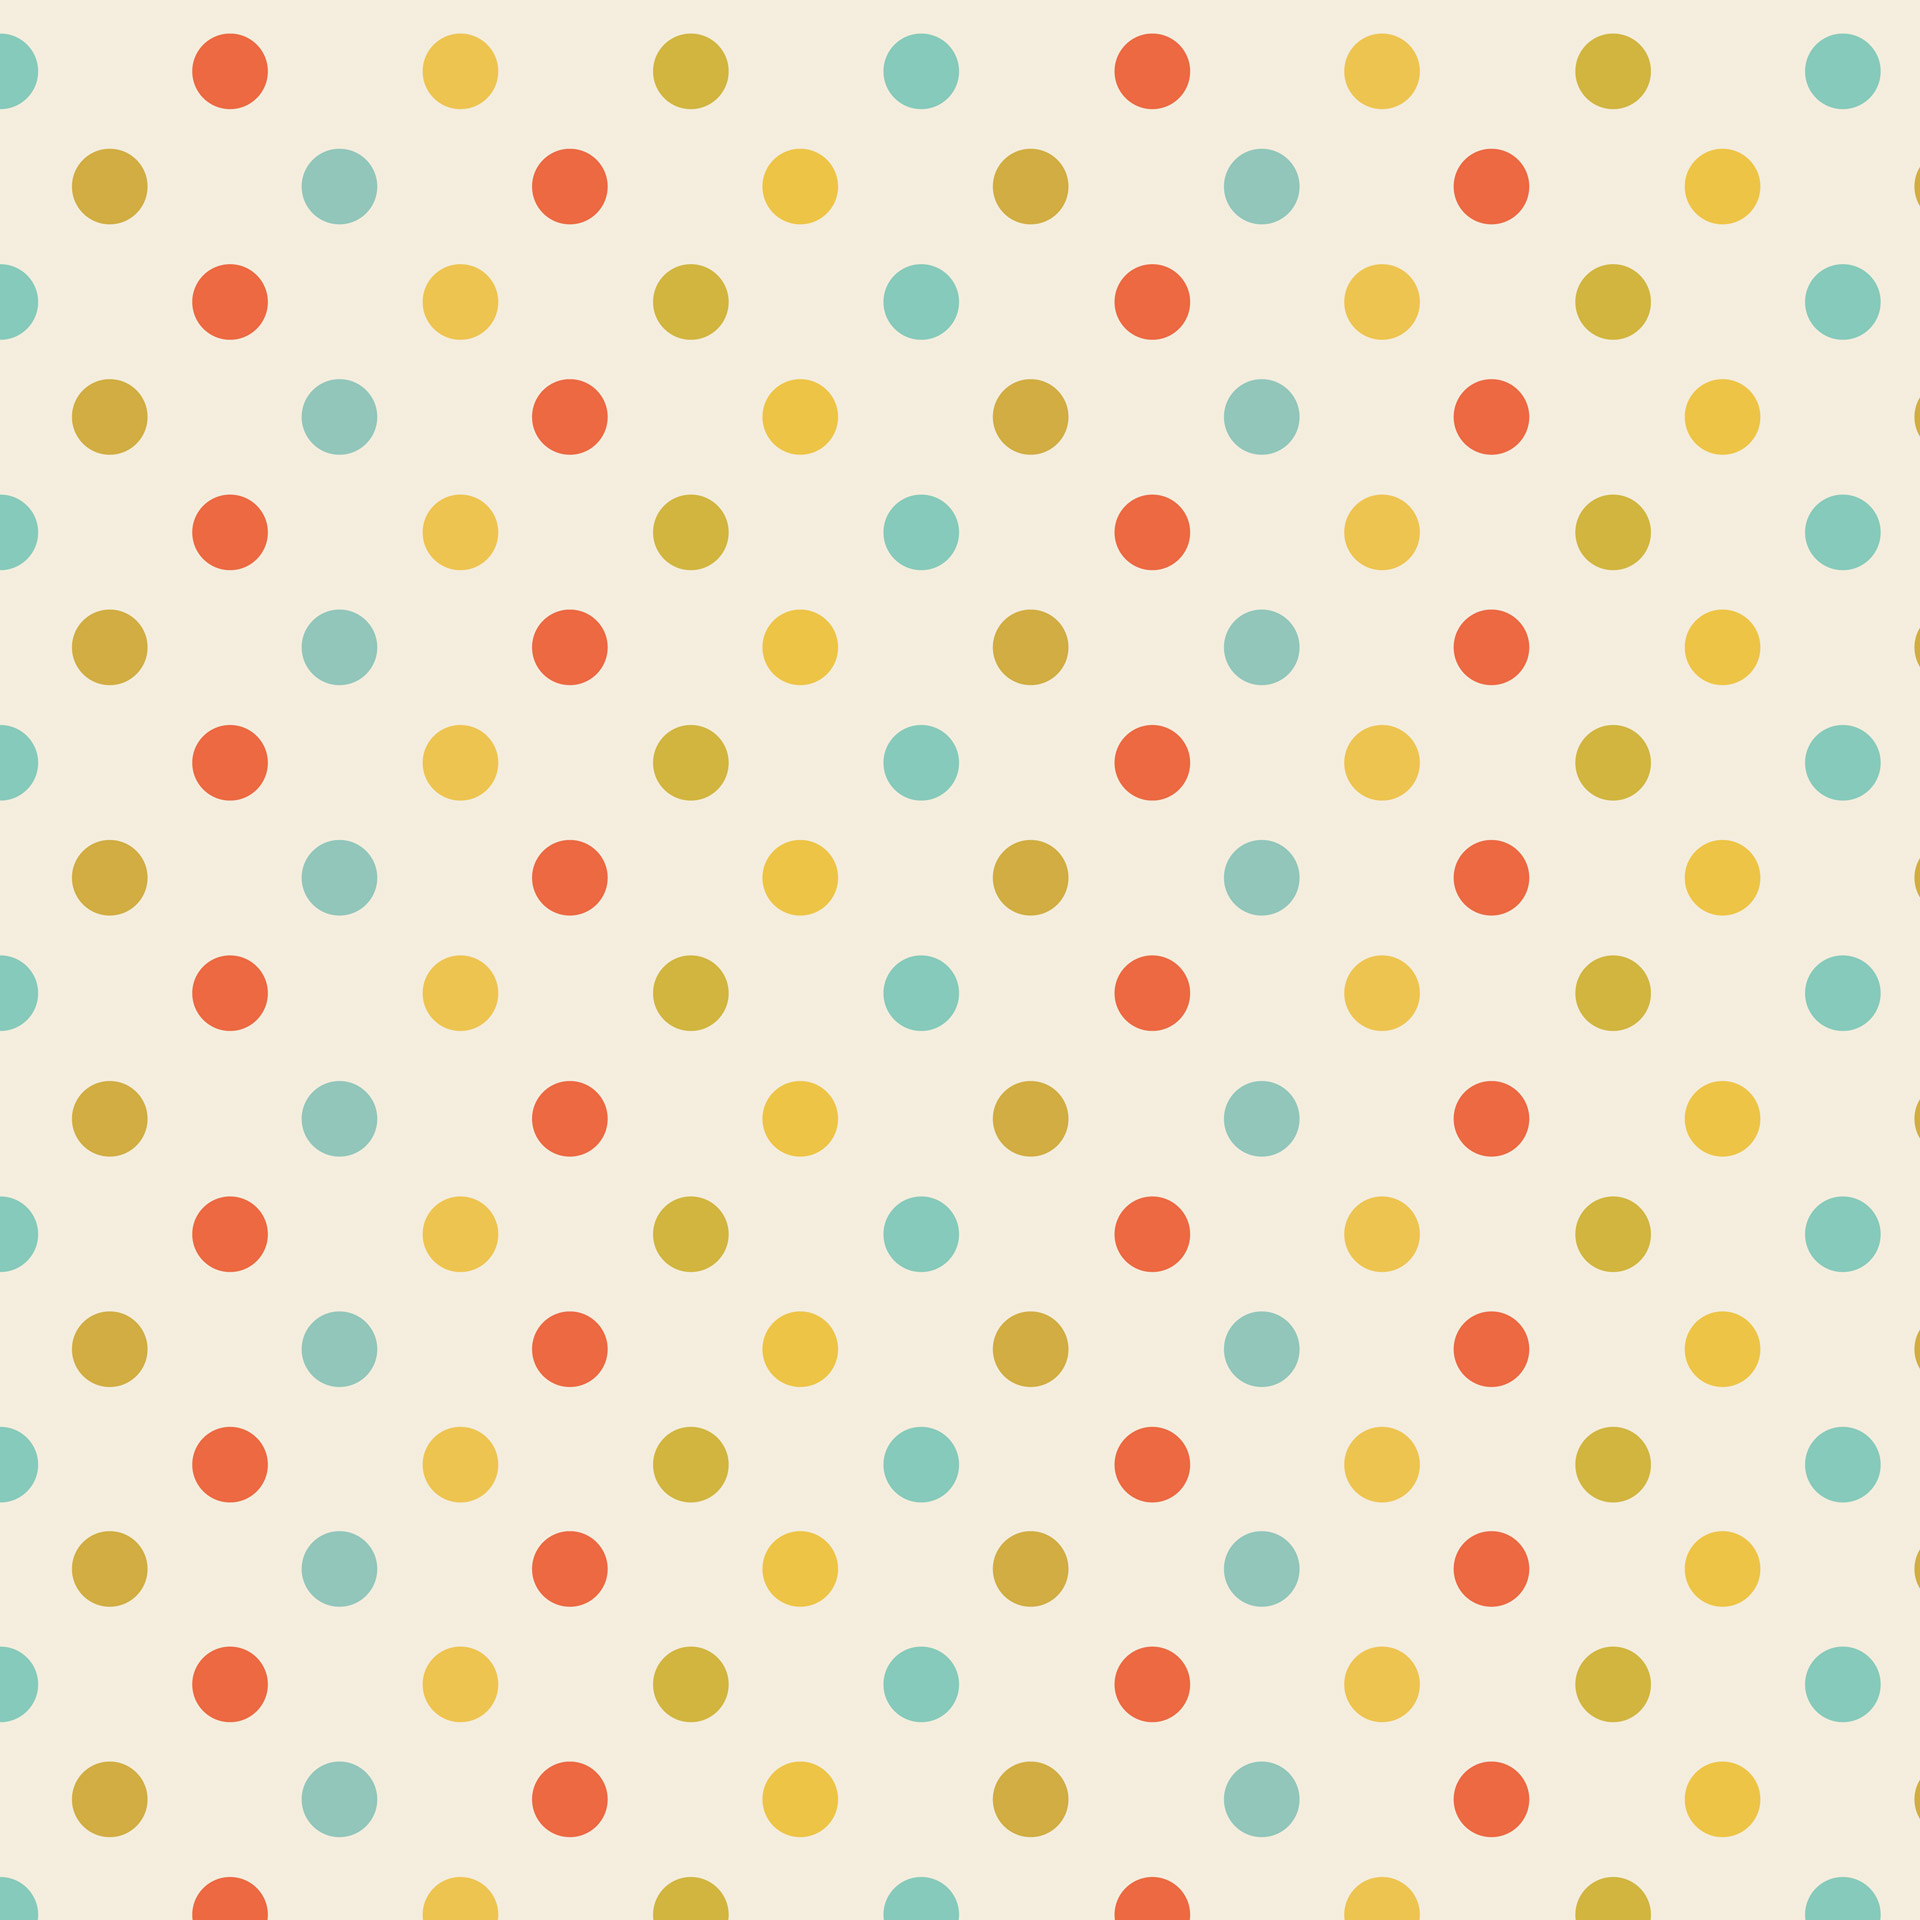 Vintage polka dots seamless background